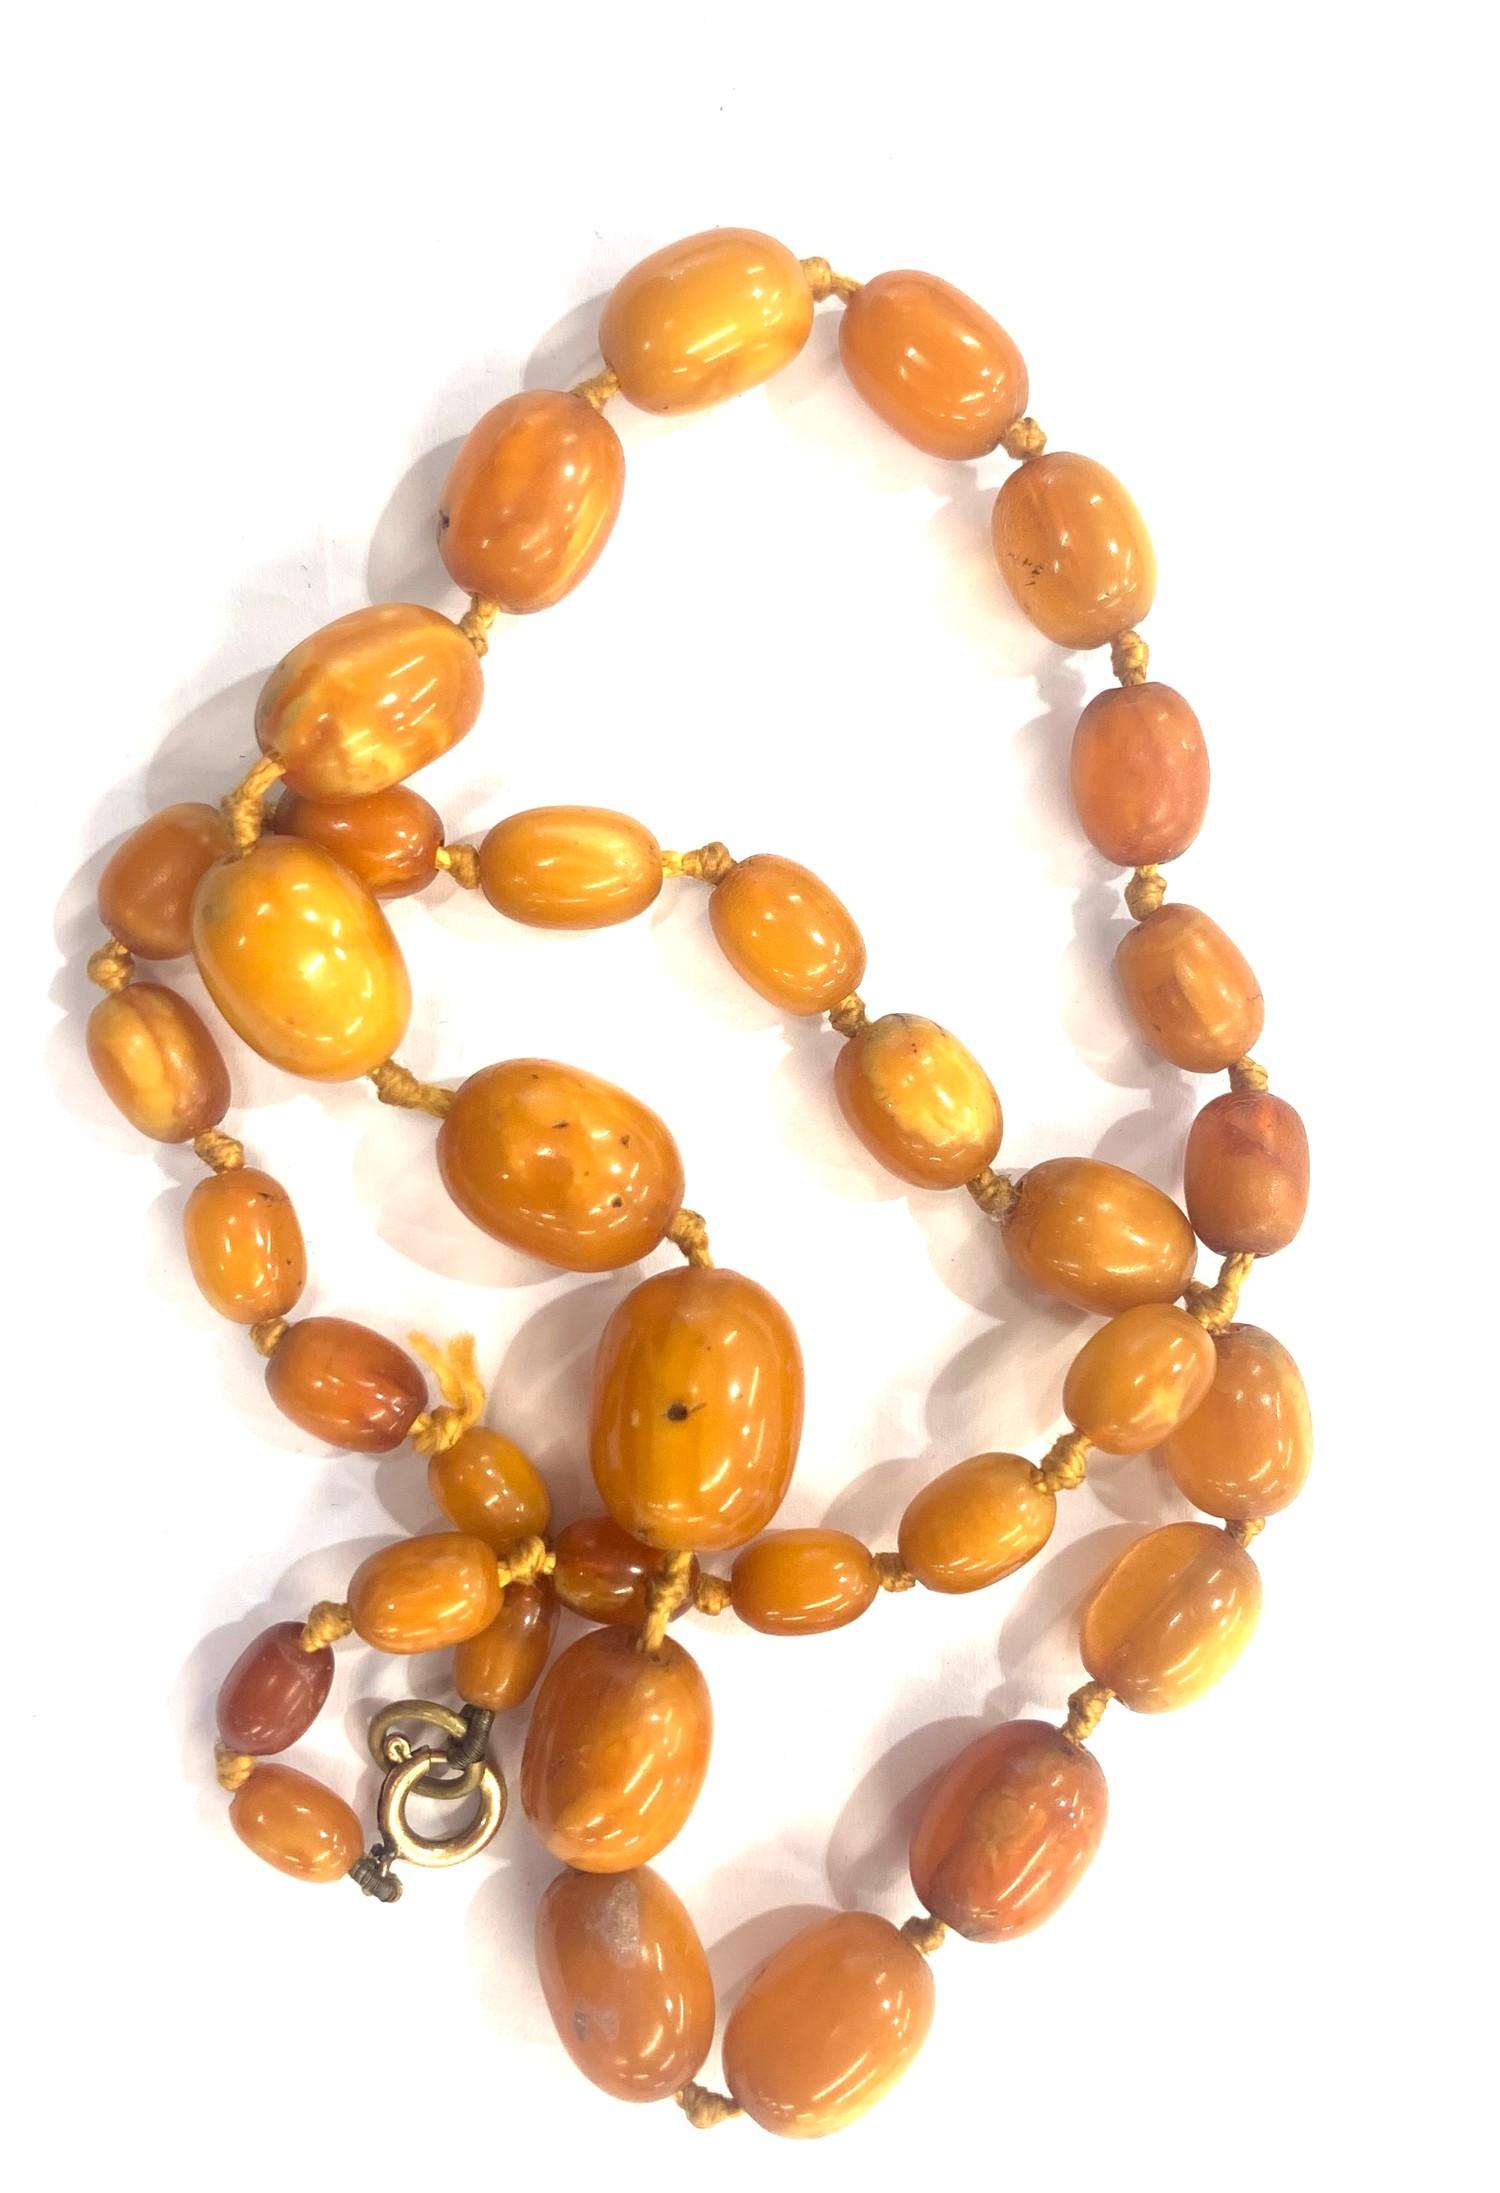 Egg yolk amber bead necklace weight 20g